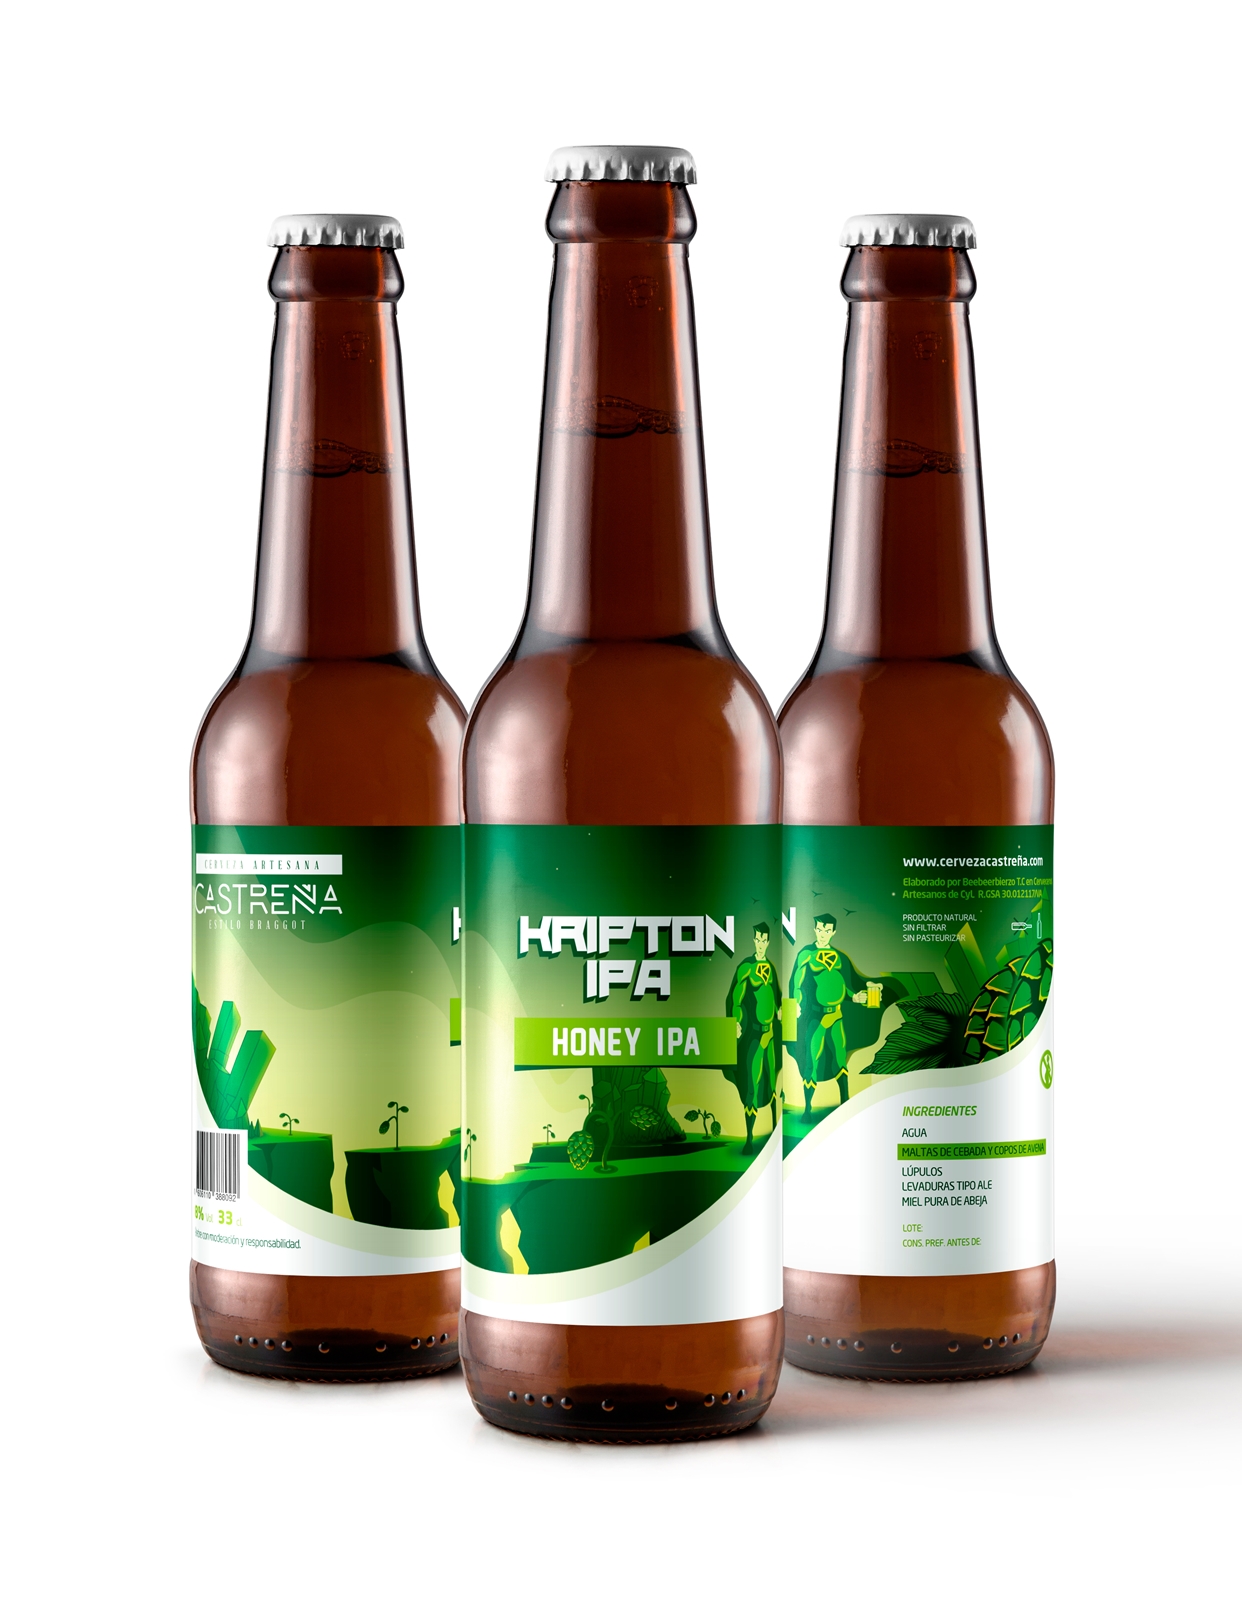 Cerveza Castreña Kriptonipa 33cl - Viking Bad